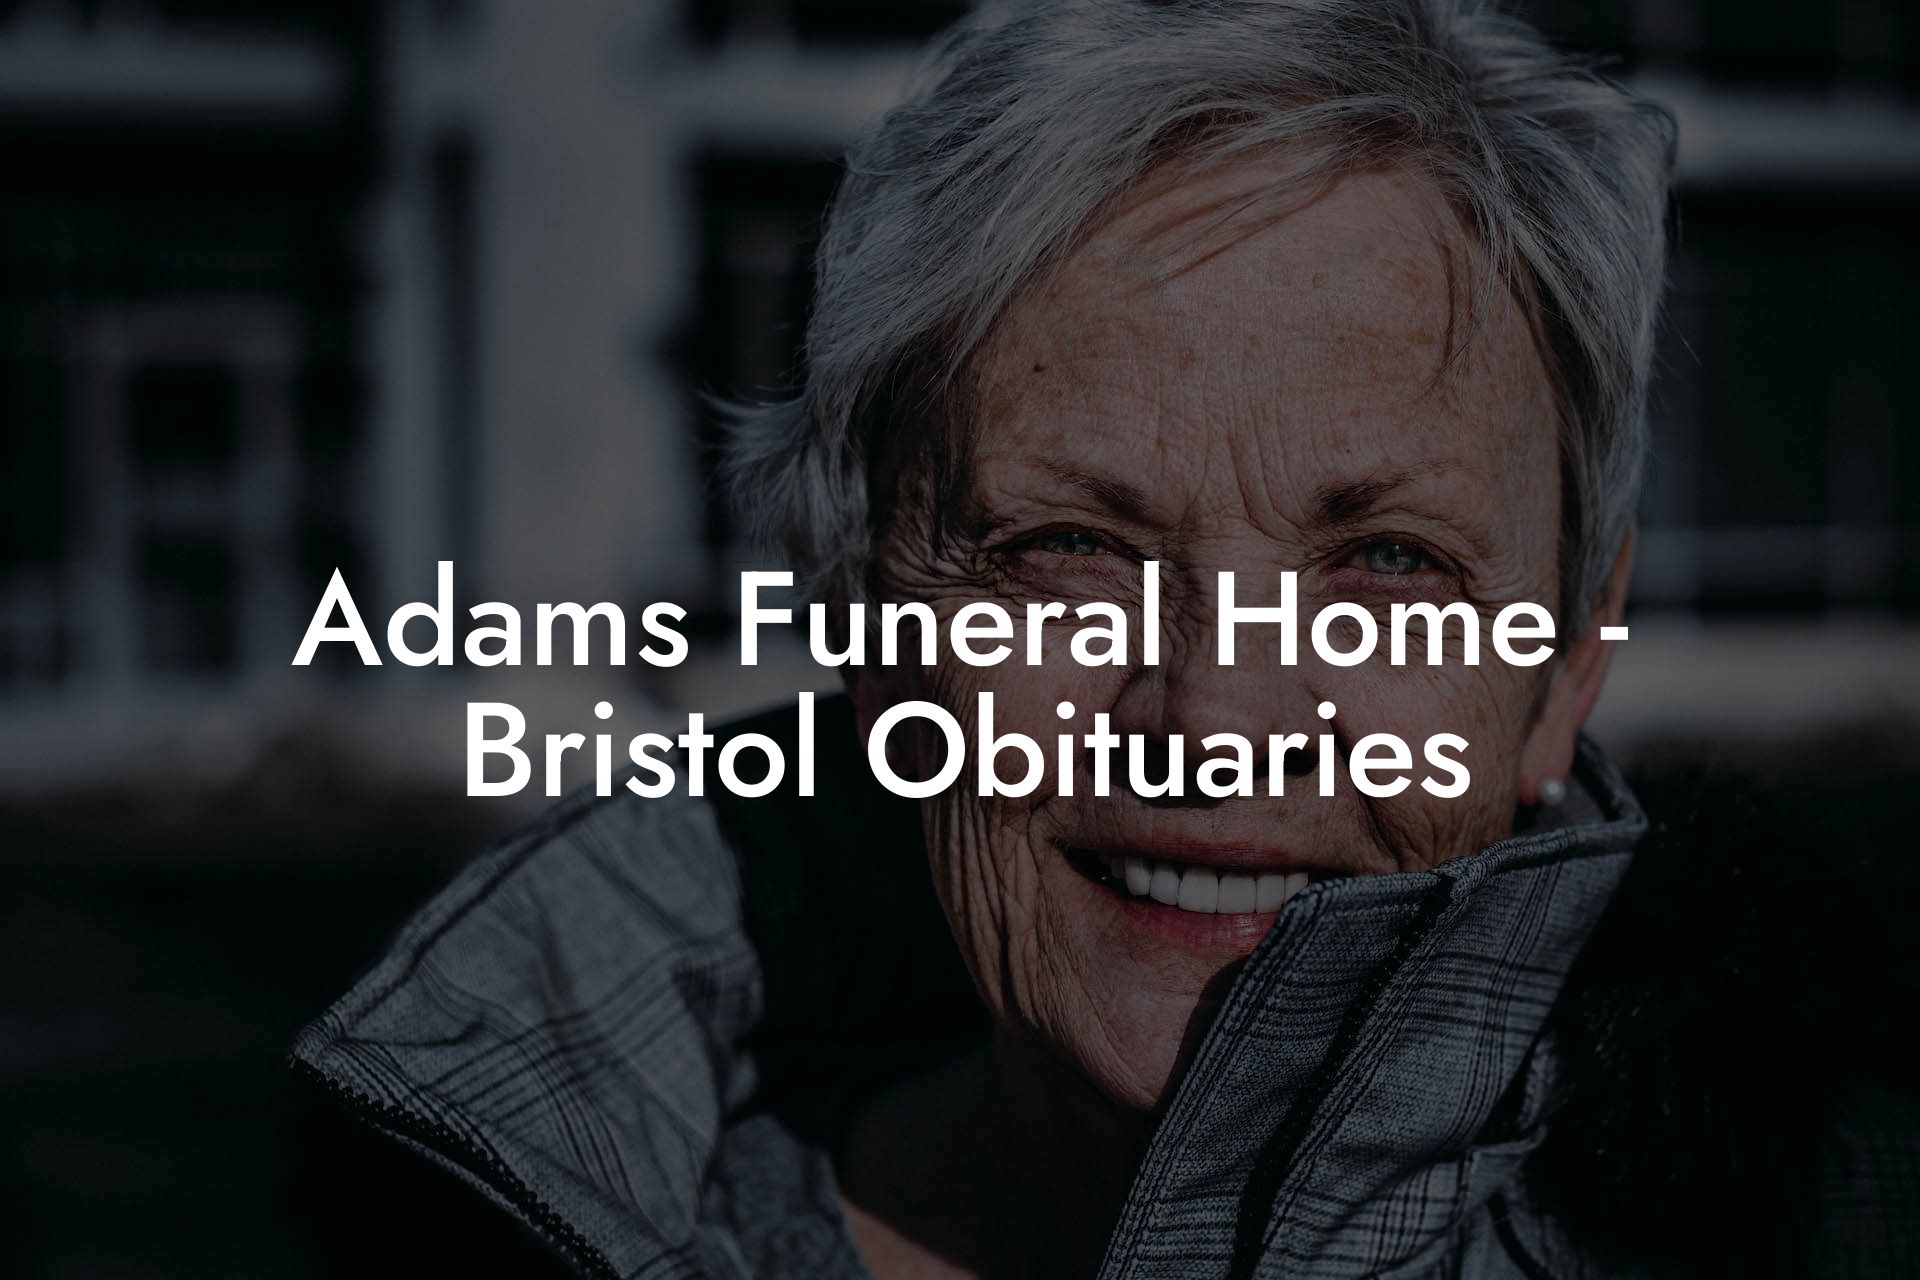 Adams Funeral Home - Bristol Obituaries